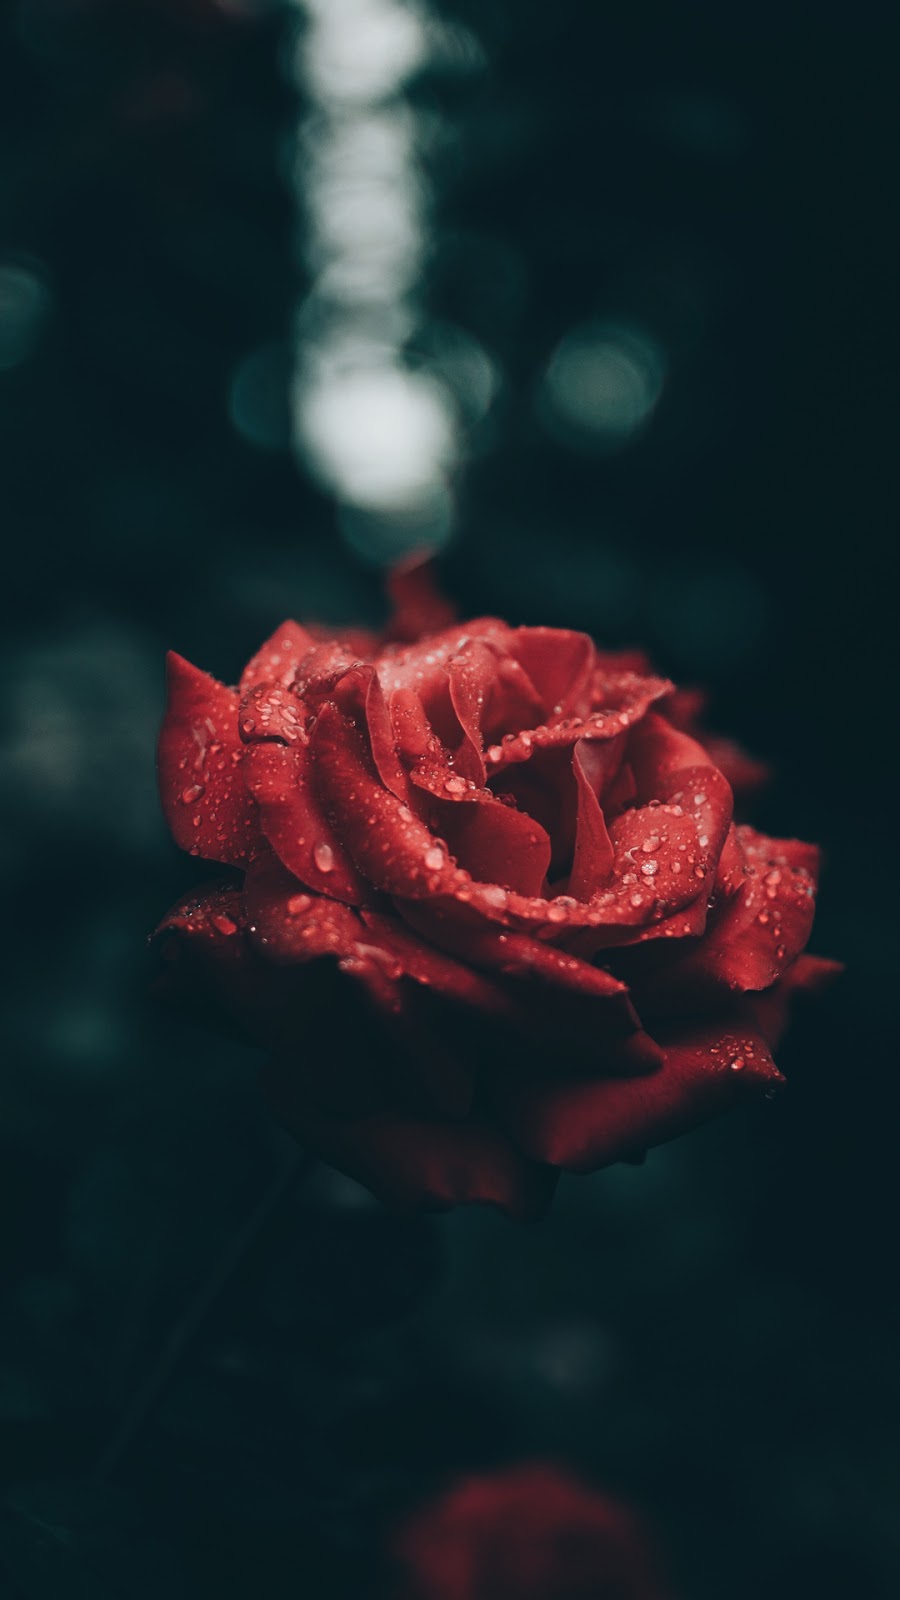 Rose and raindrops